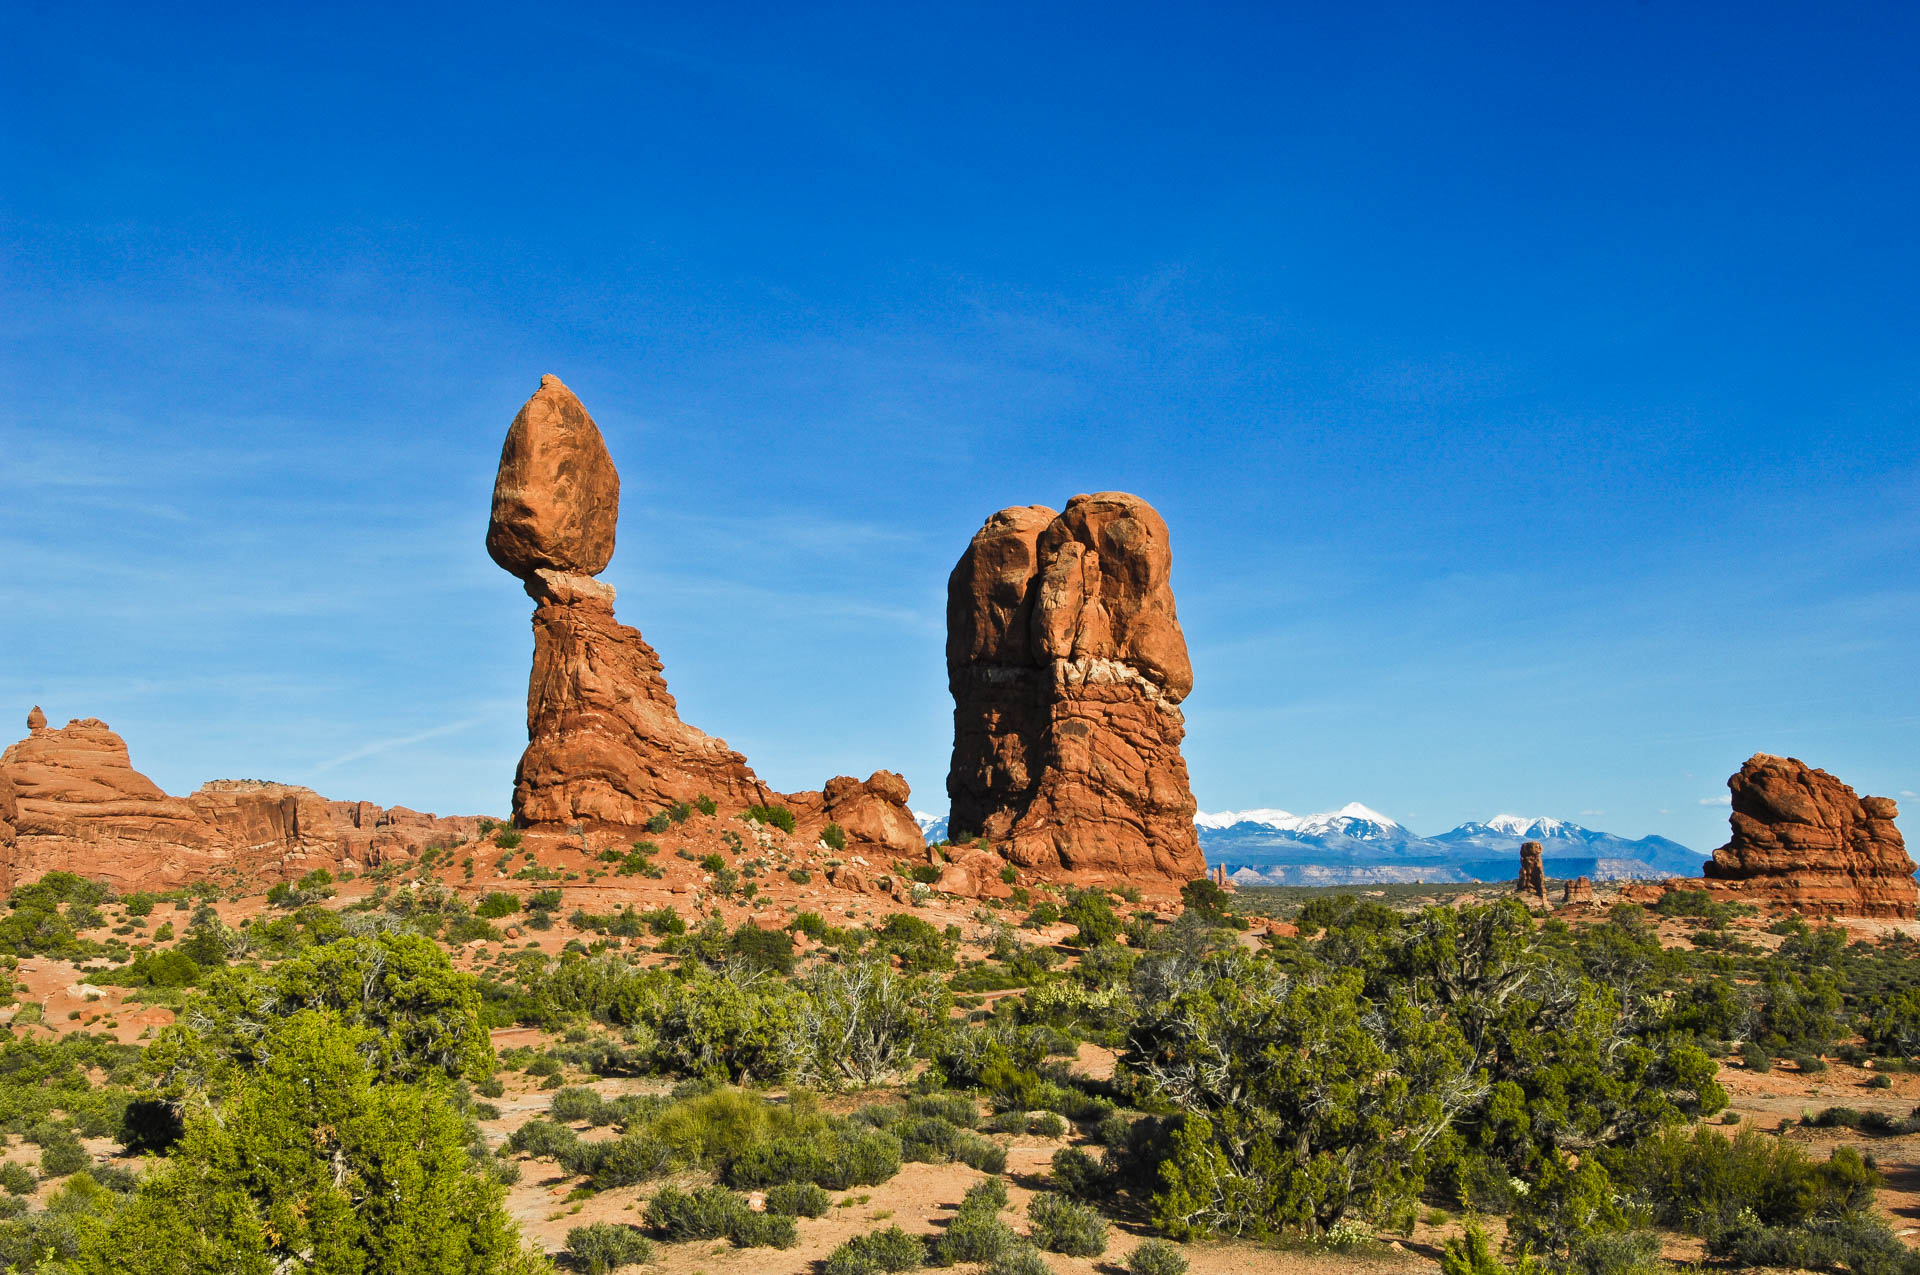 Arches National Park: Balanced Rock